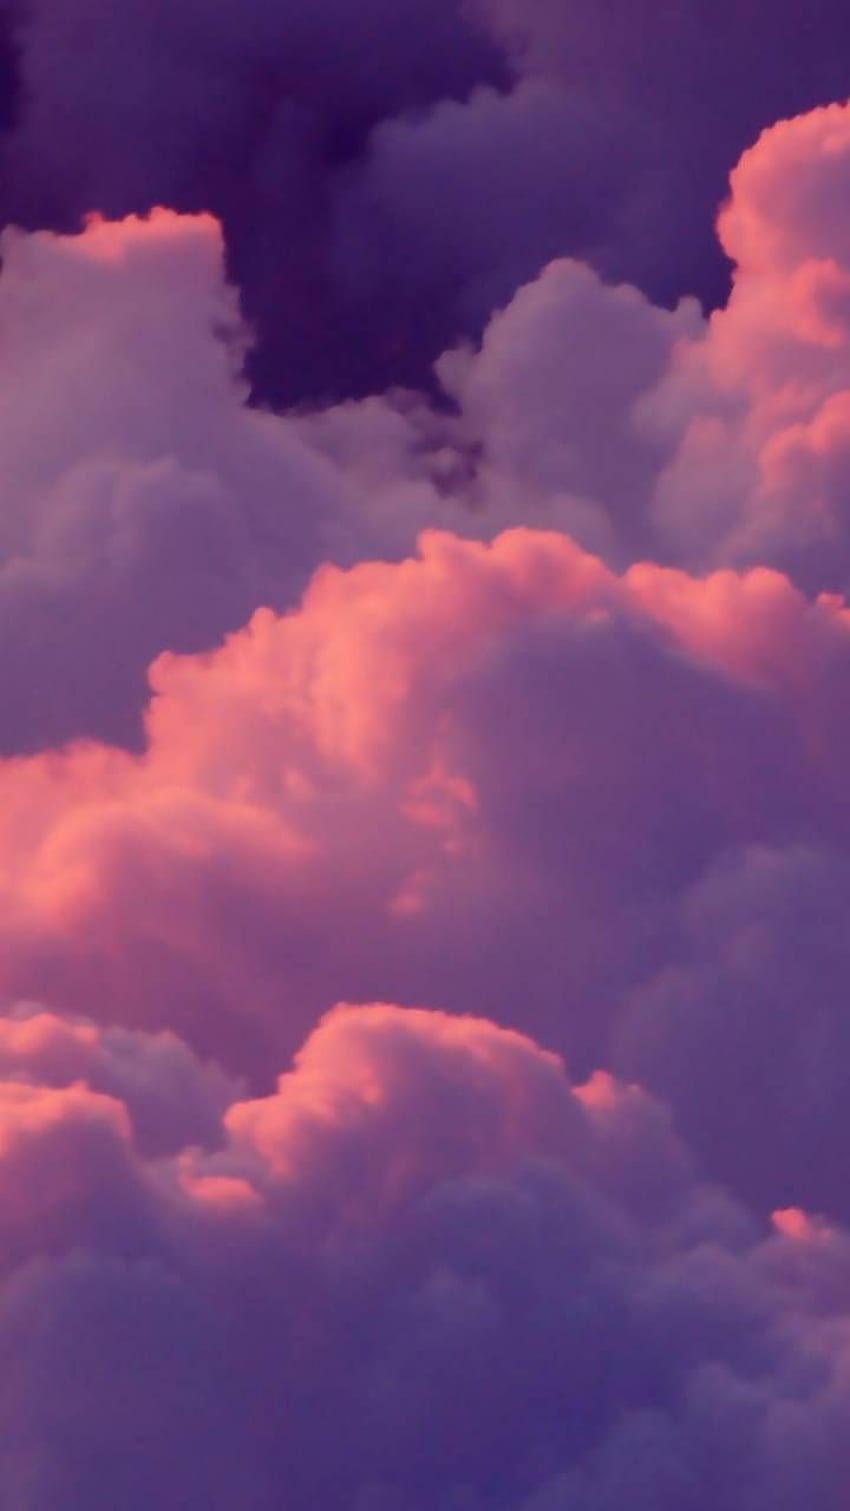 Pink Cloud Background Images - Free Download on Freepik